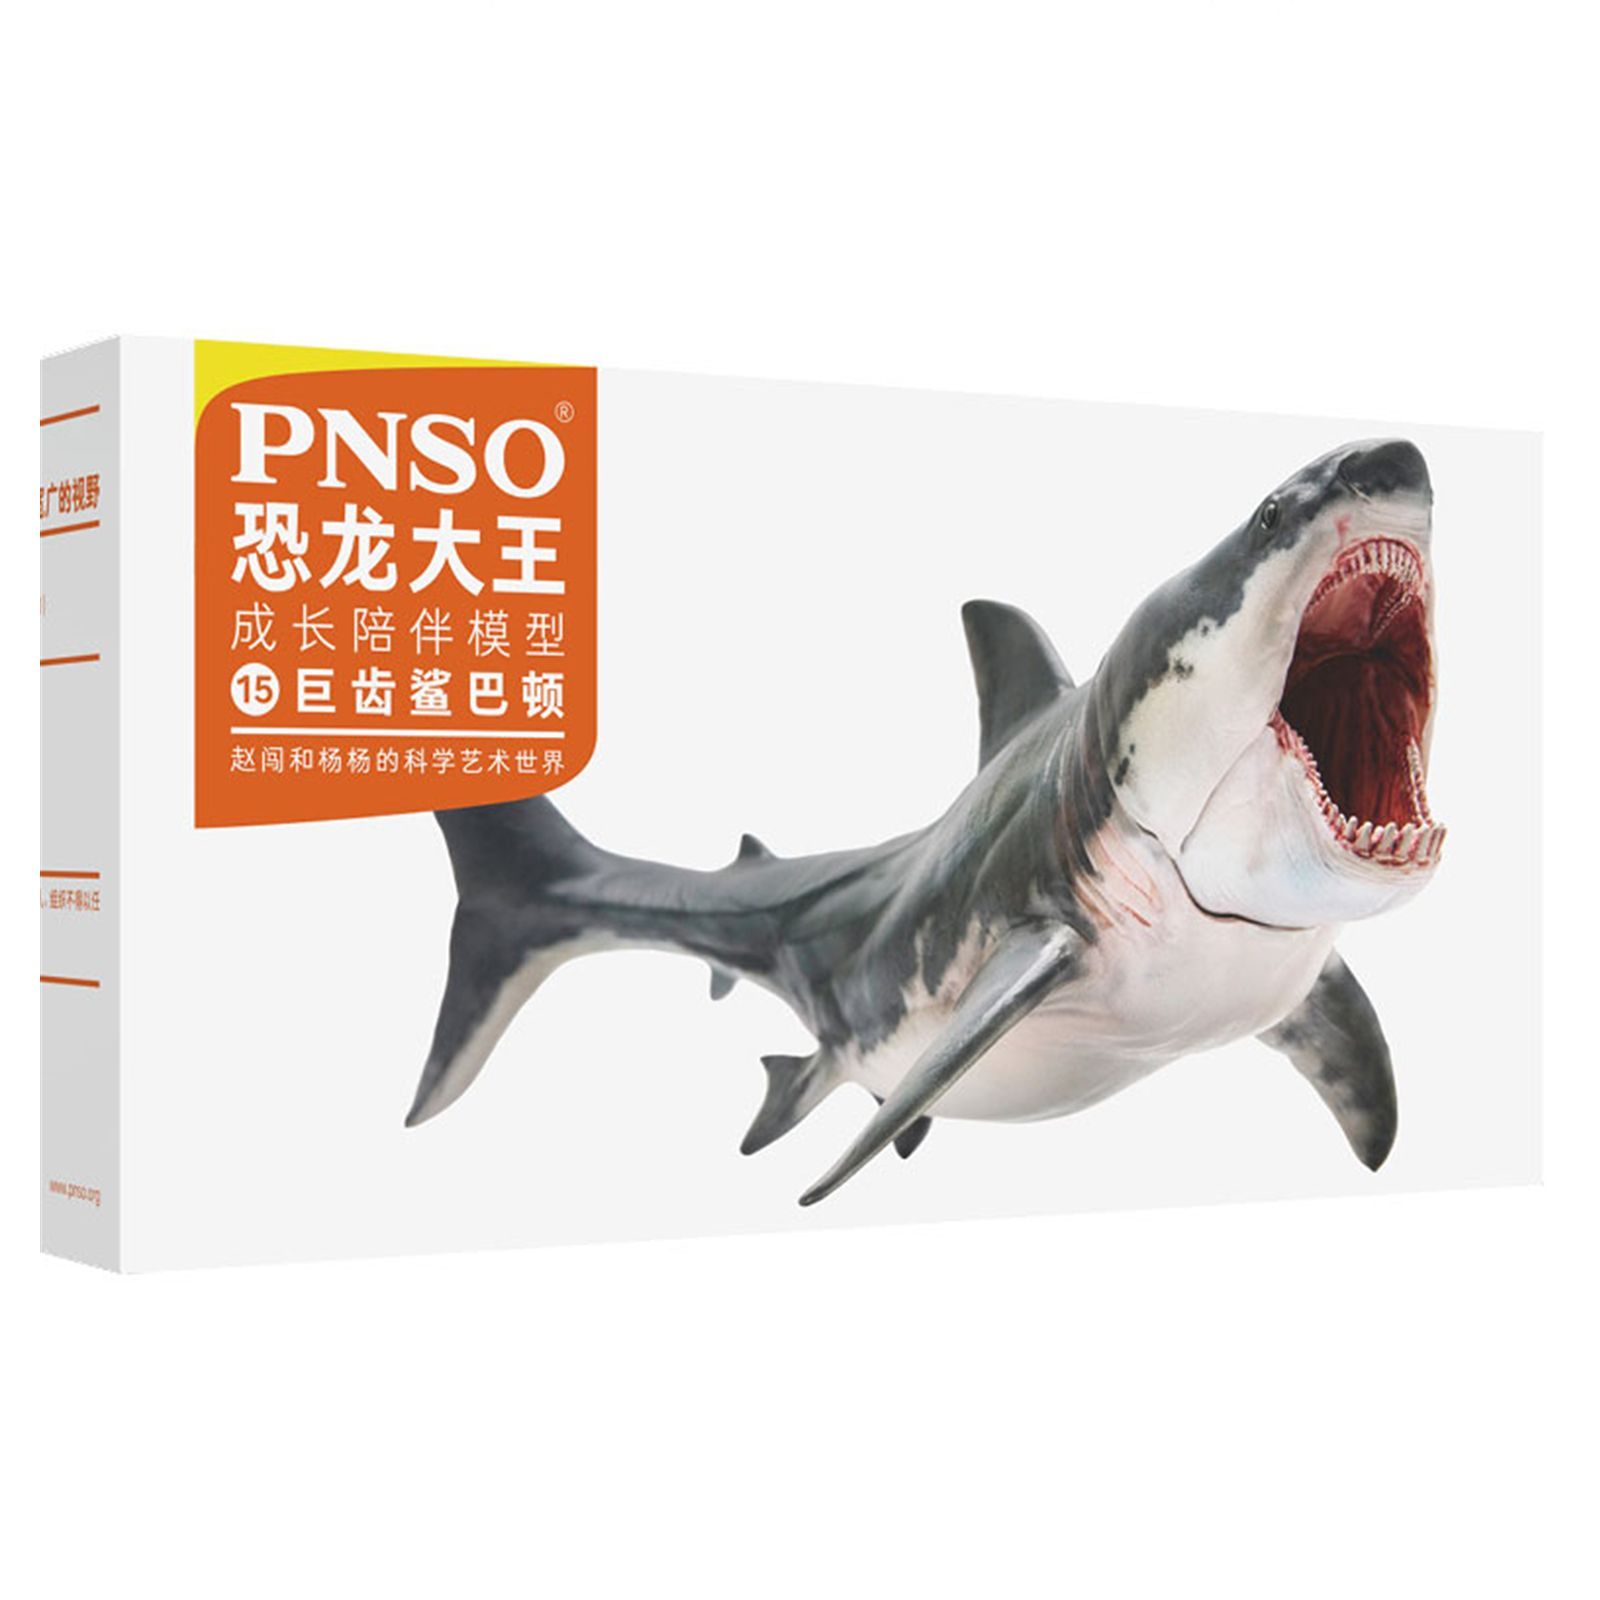 PNSO メガロドン ホホジロザメ パットン サメ 海洋動物 生物 魚類 